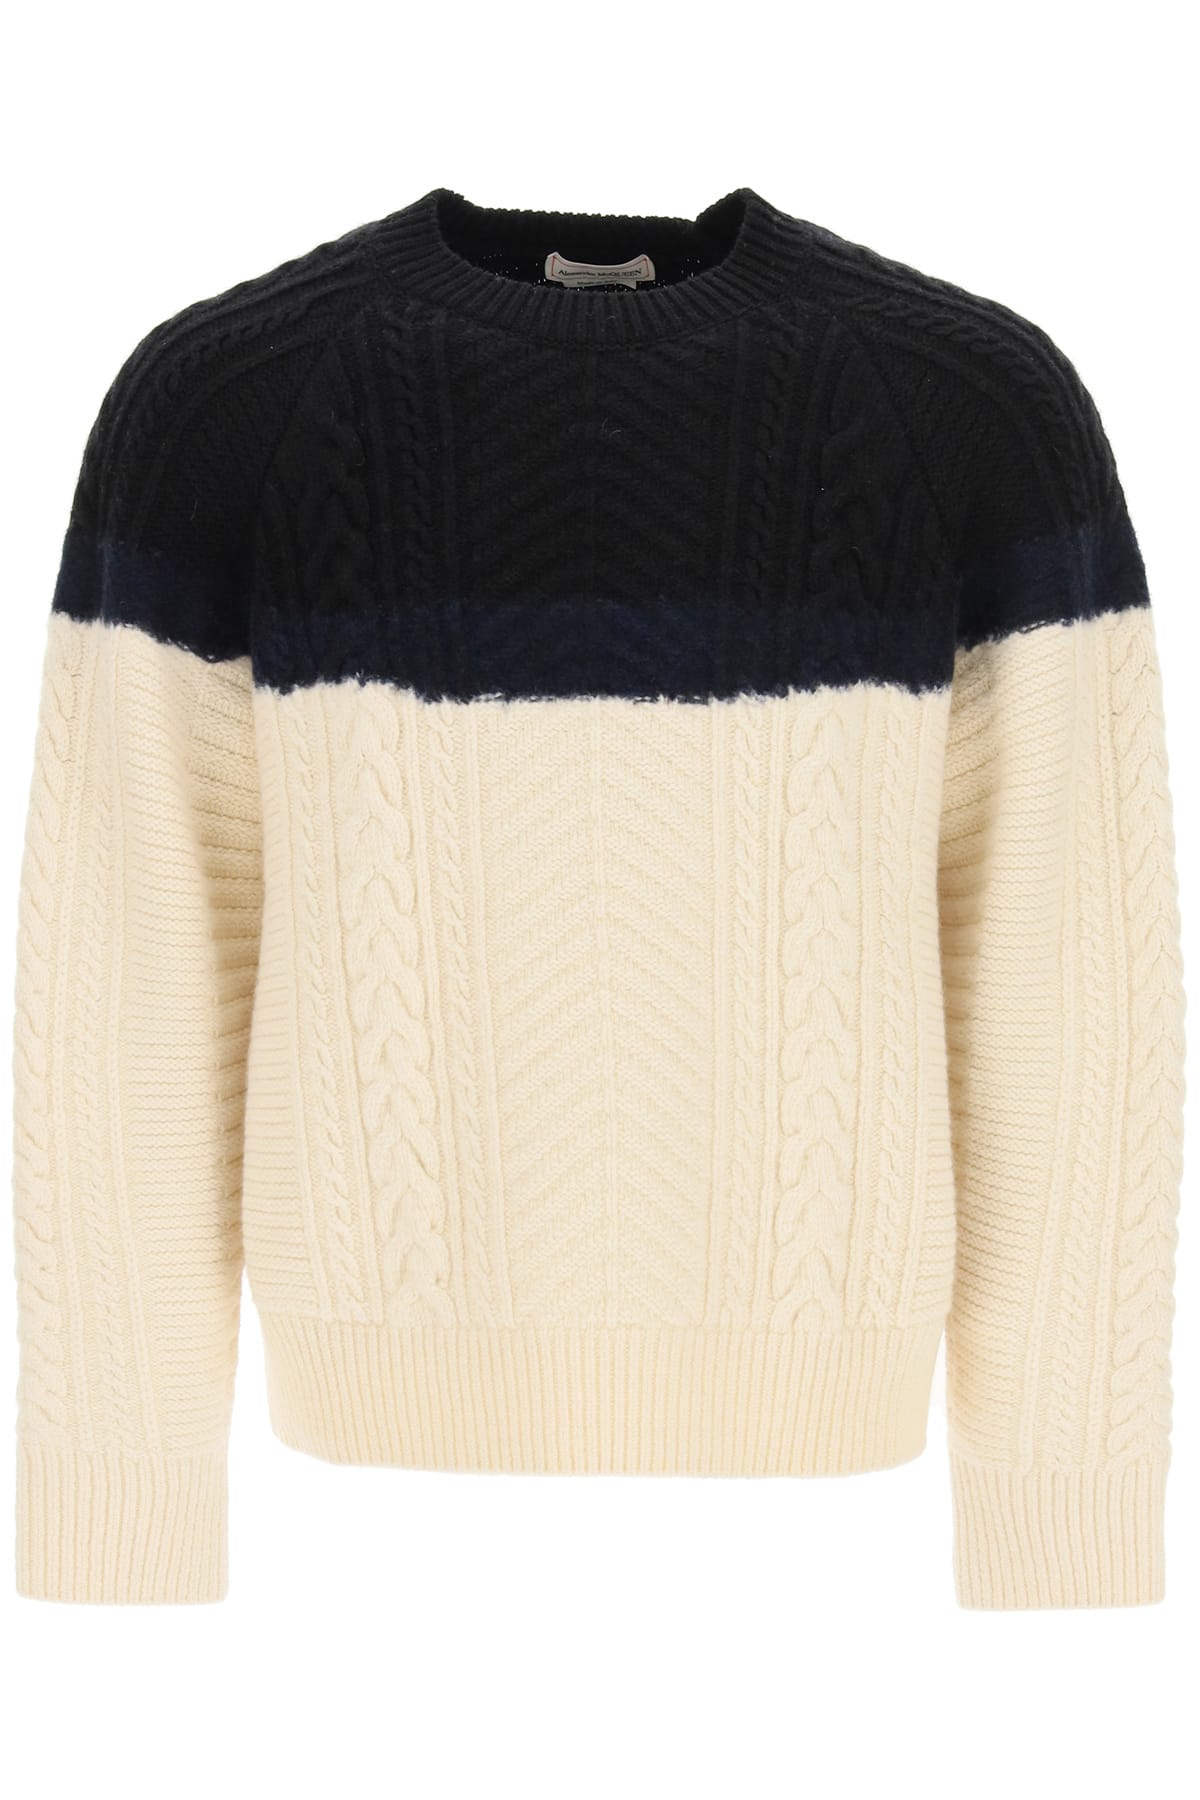 Alexander McQueen Bicolor Knitted Sweater